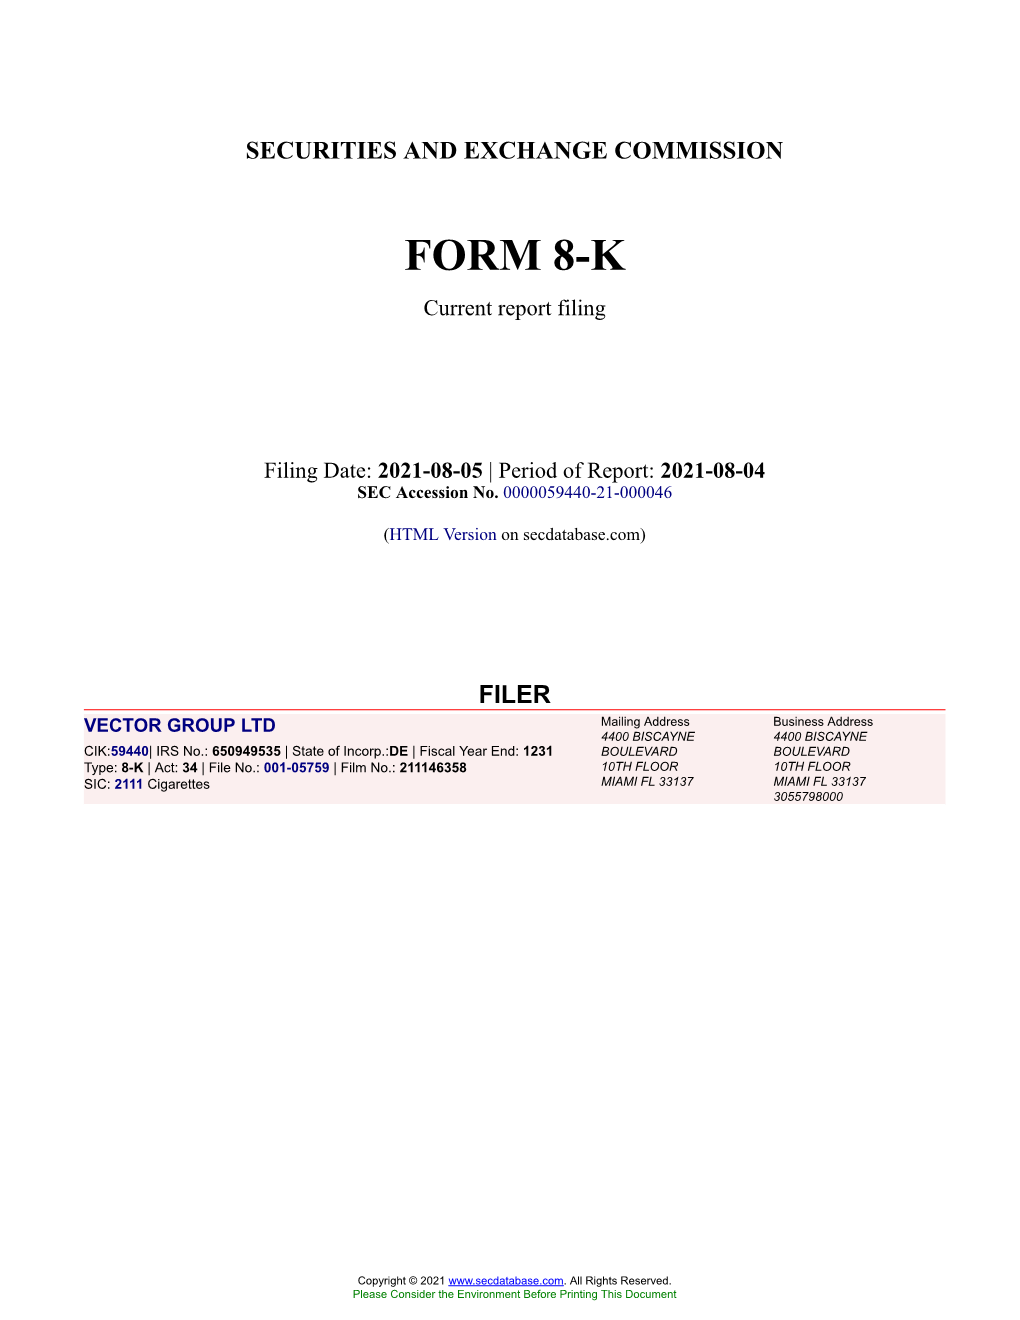 VECTOR GROUP LTD Form 8-K Current Event Report Filed 2021-08